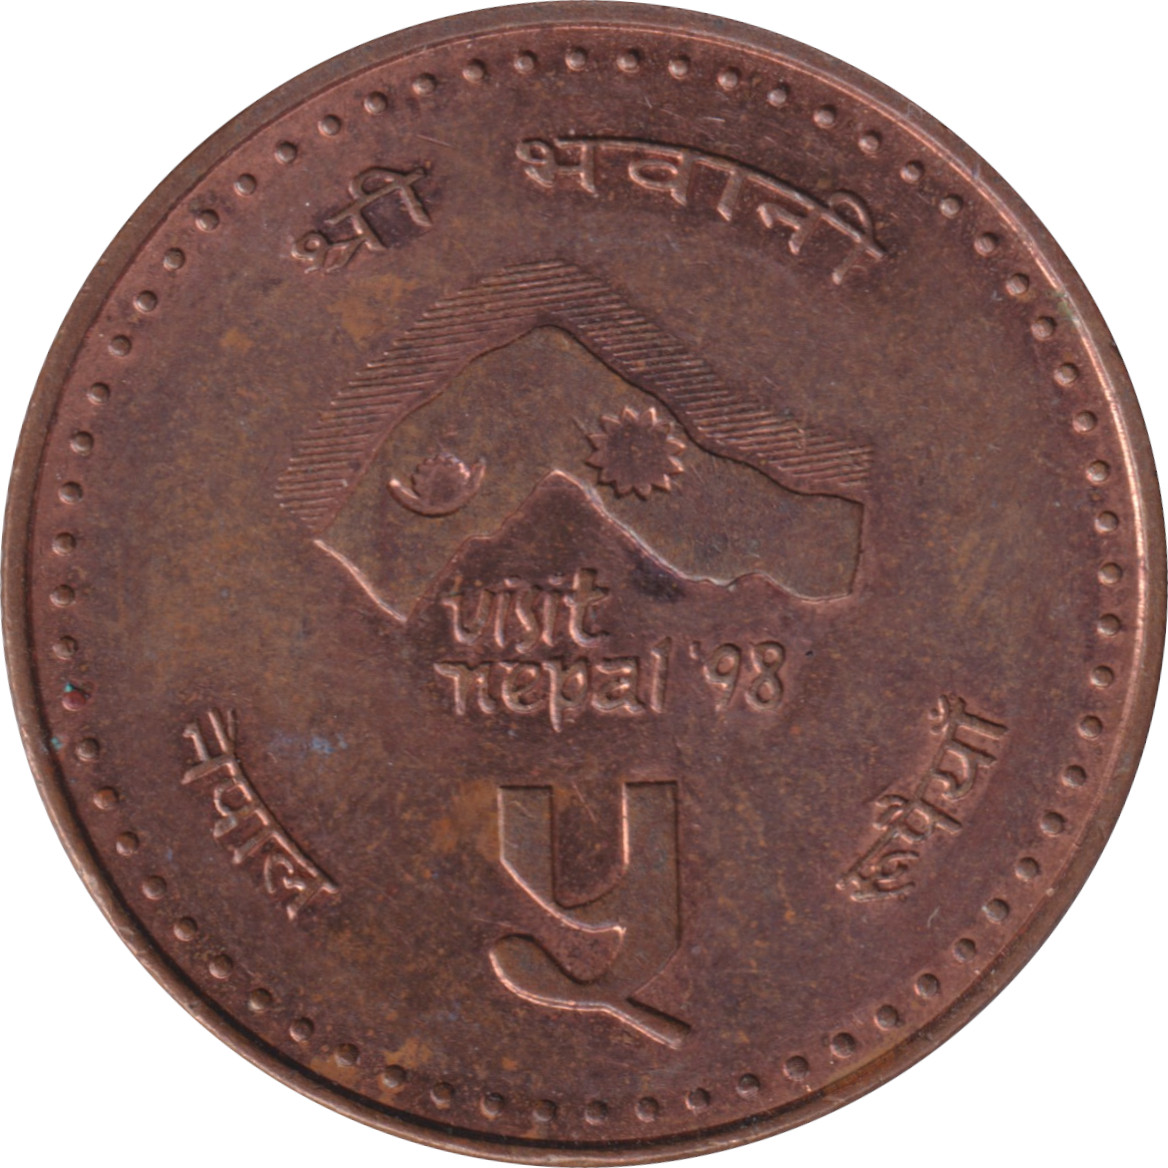 2 rupee - Visit' Nepal 98